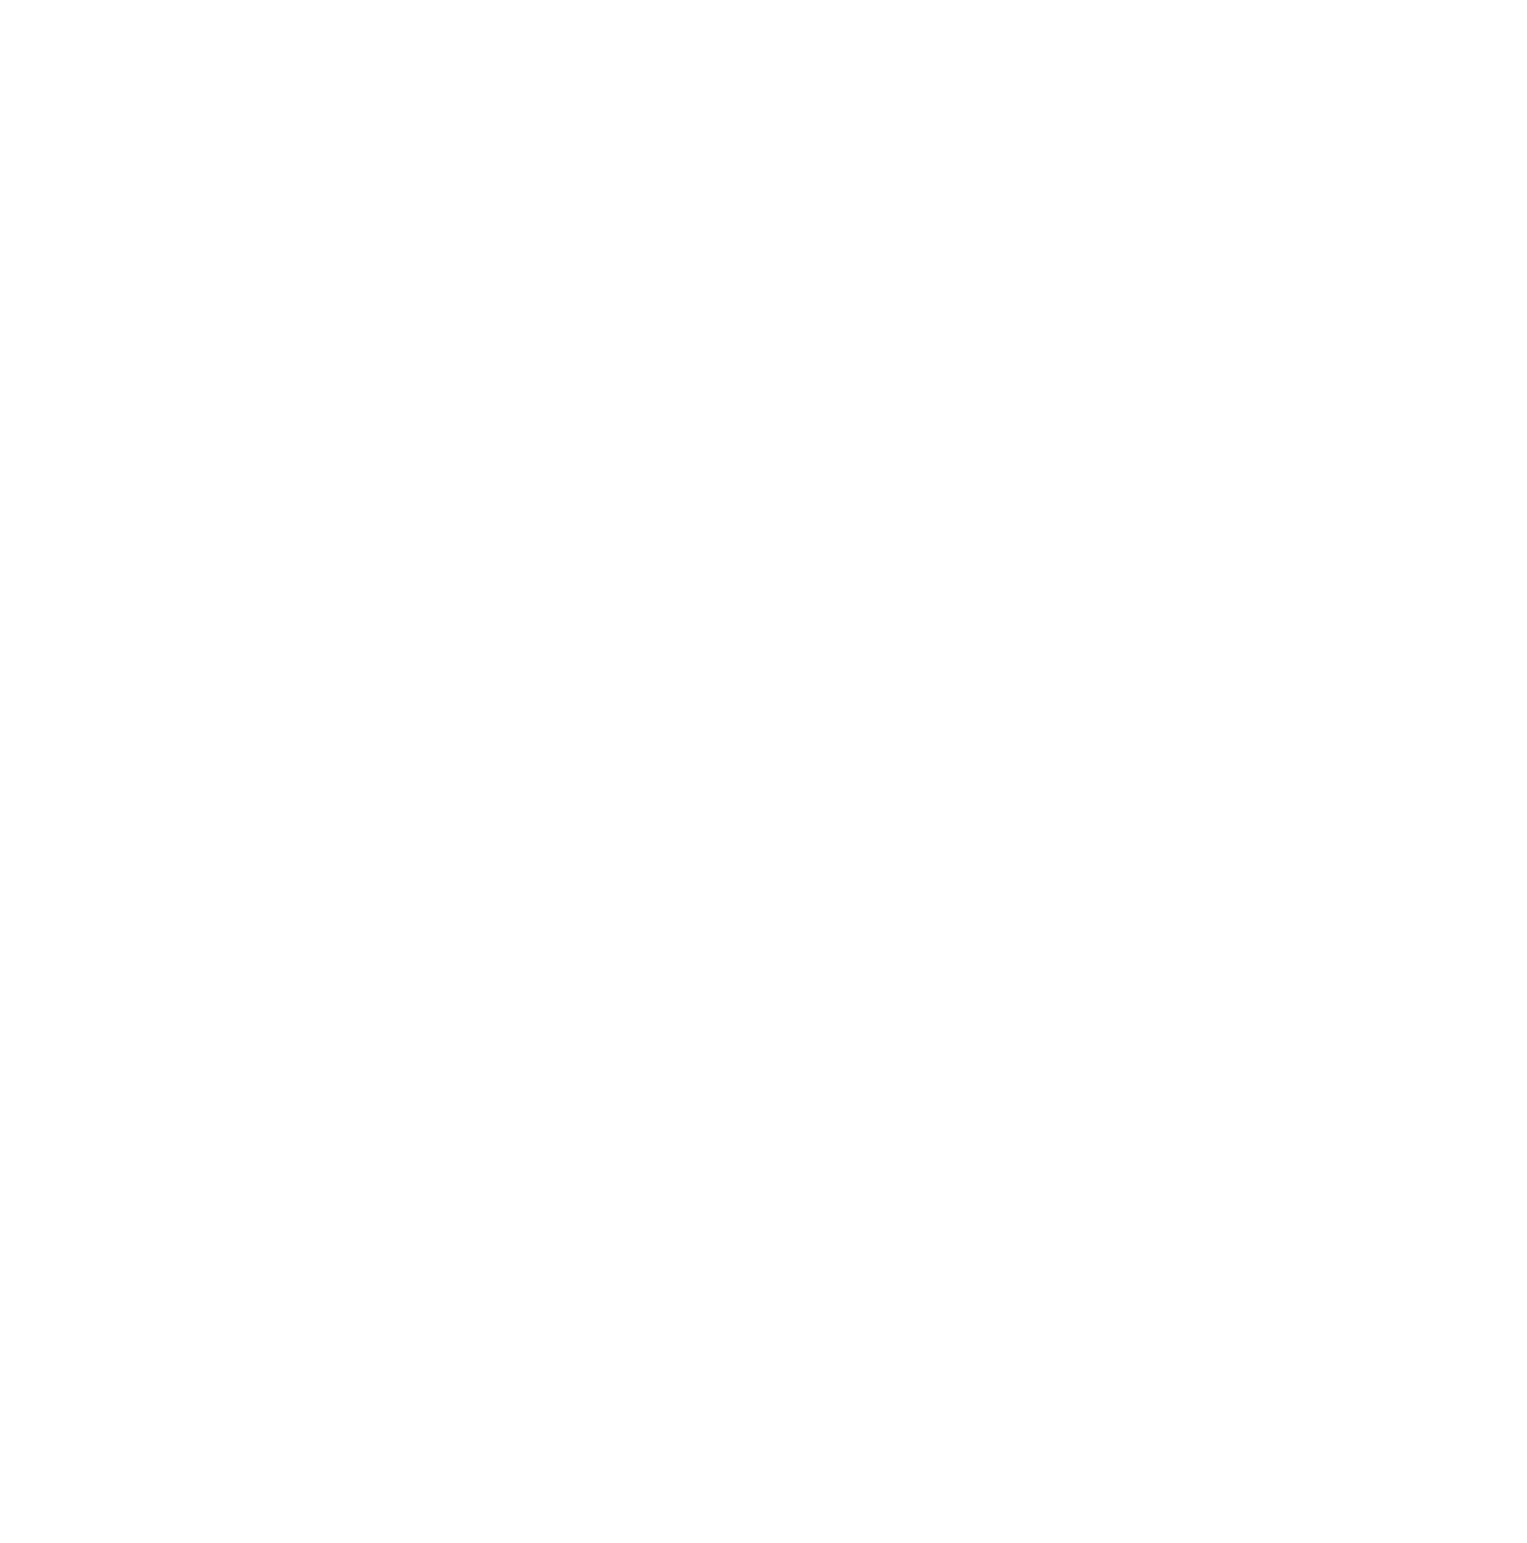 OceanFirst Financial logo for dark backgrounds (transparent PNG)